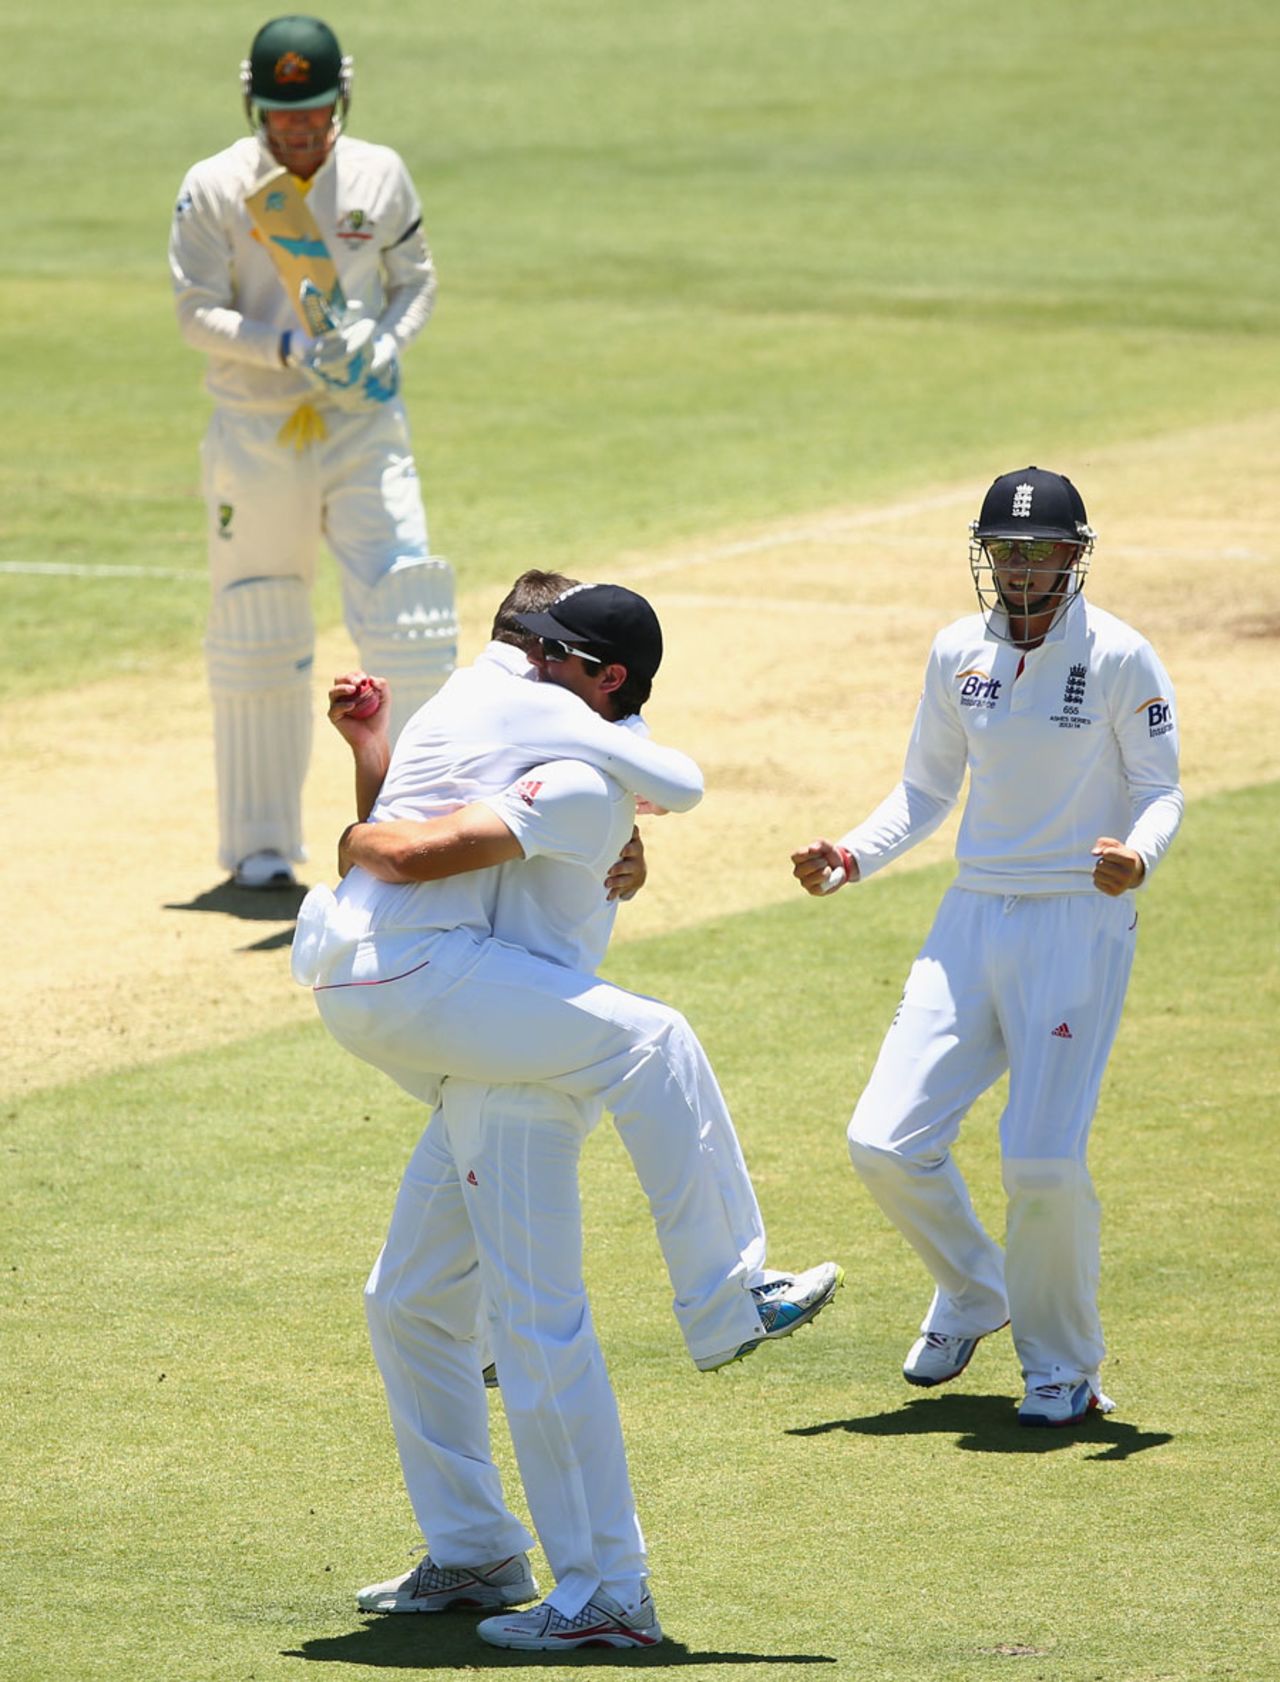 Graeme Swann had Michael Clarke caught by Alastair Cook, Australia v England, 3rd Test, Perth, 1st day, December 13, 2013